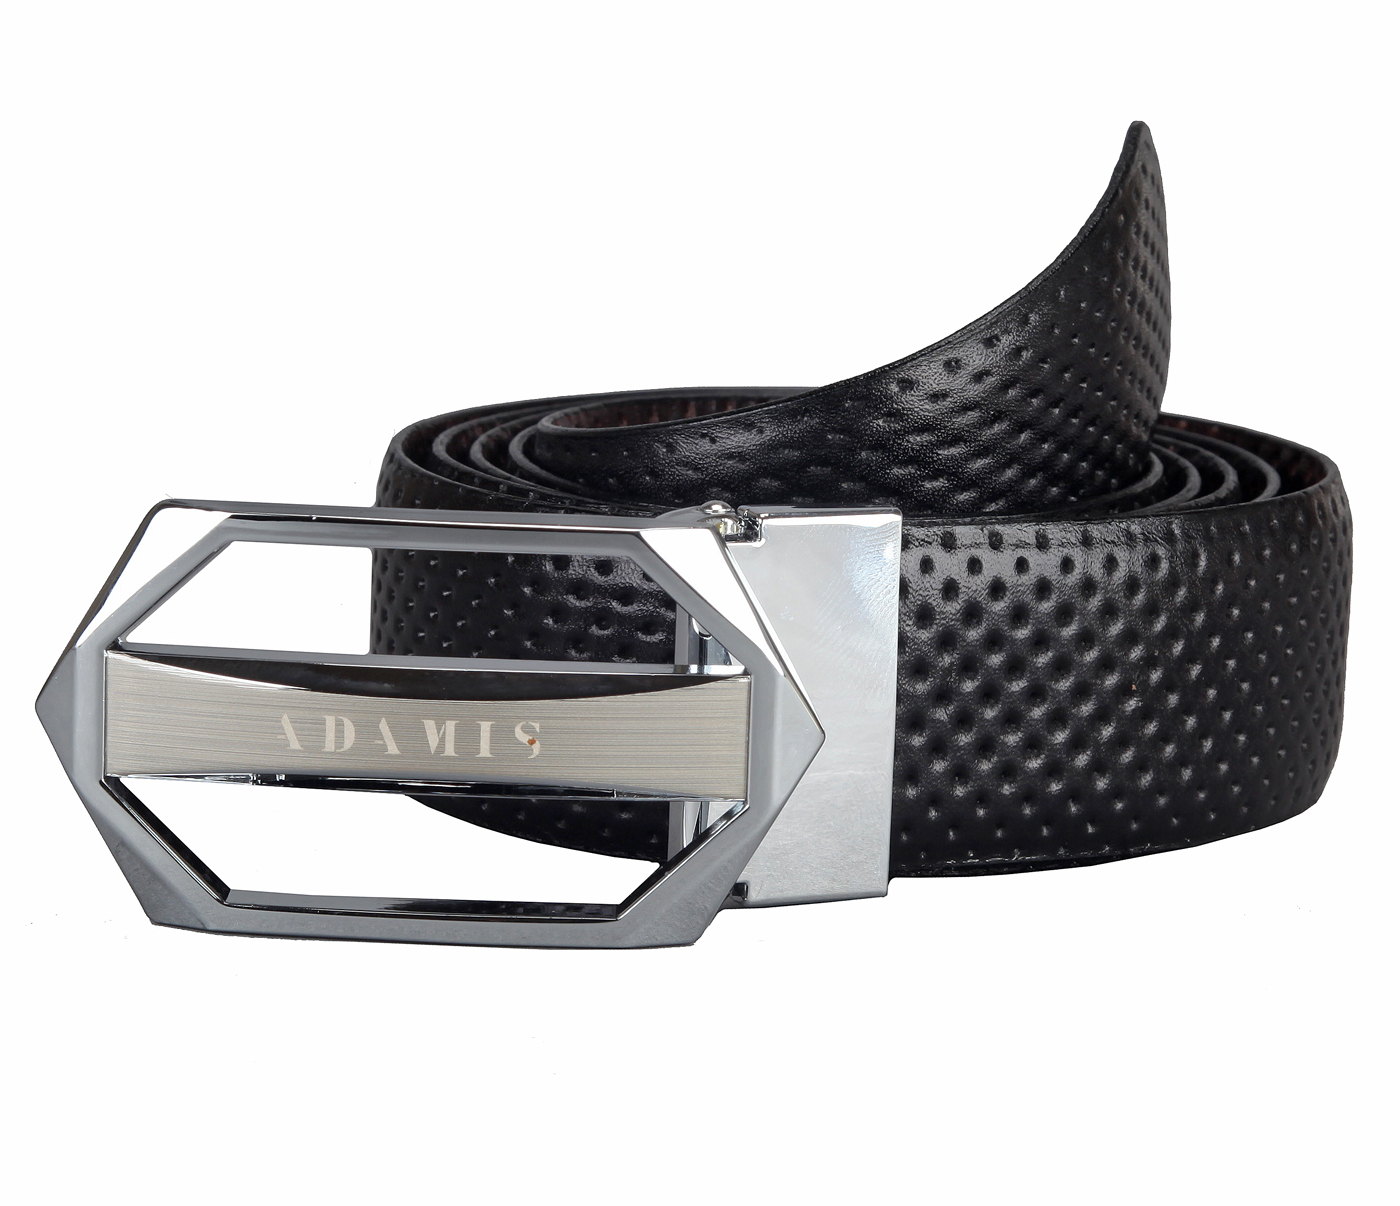 Belt--Men's reversible belt in Genuine Leather - Black/Brown